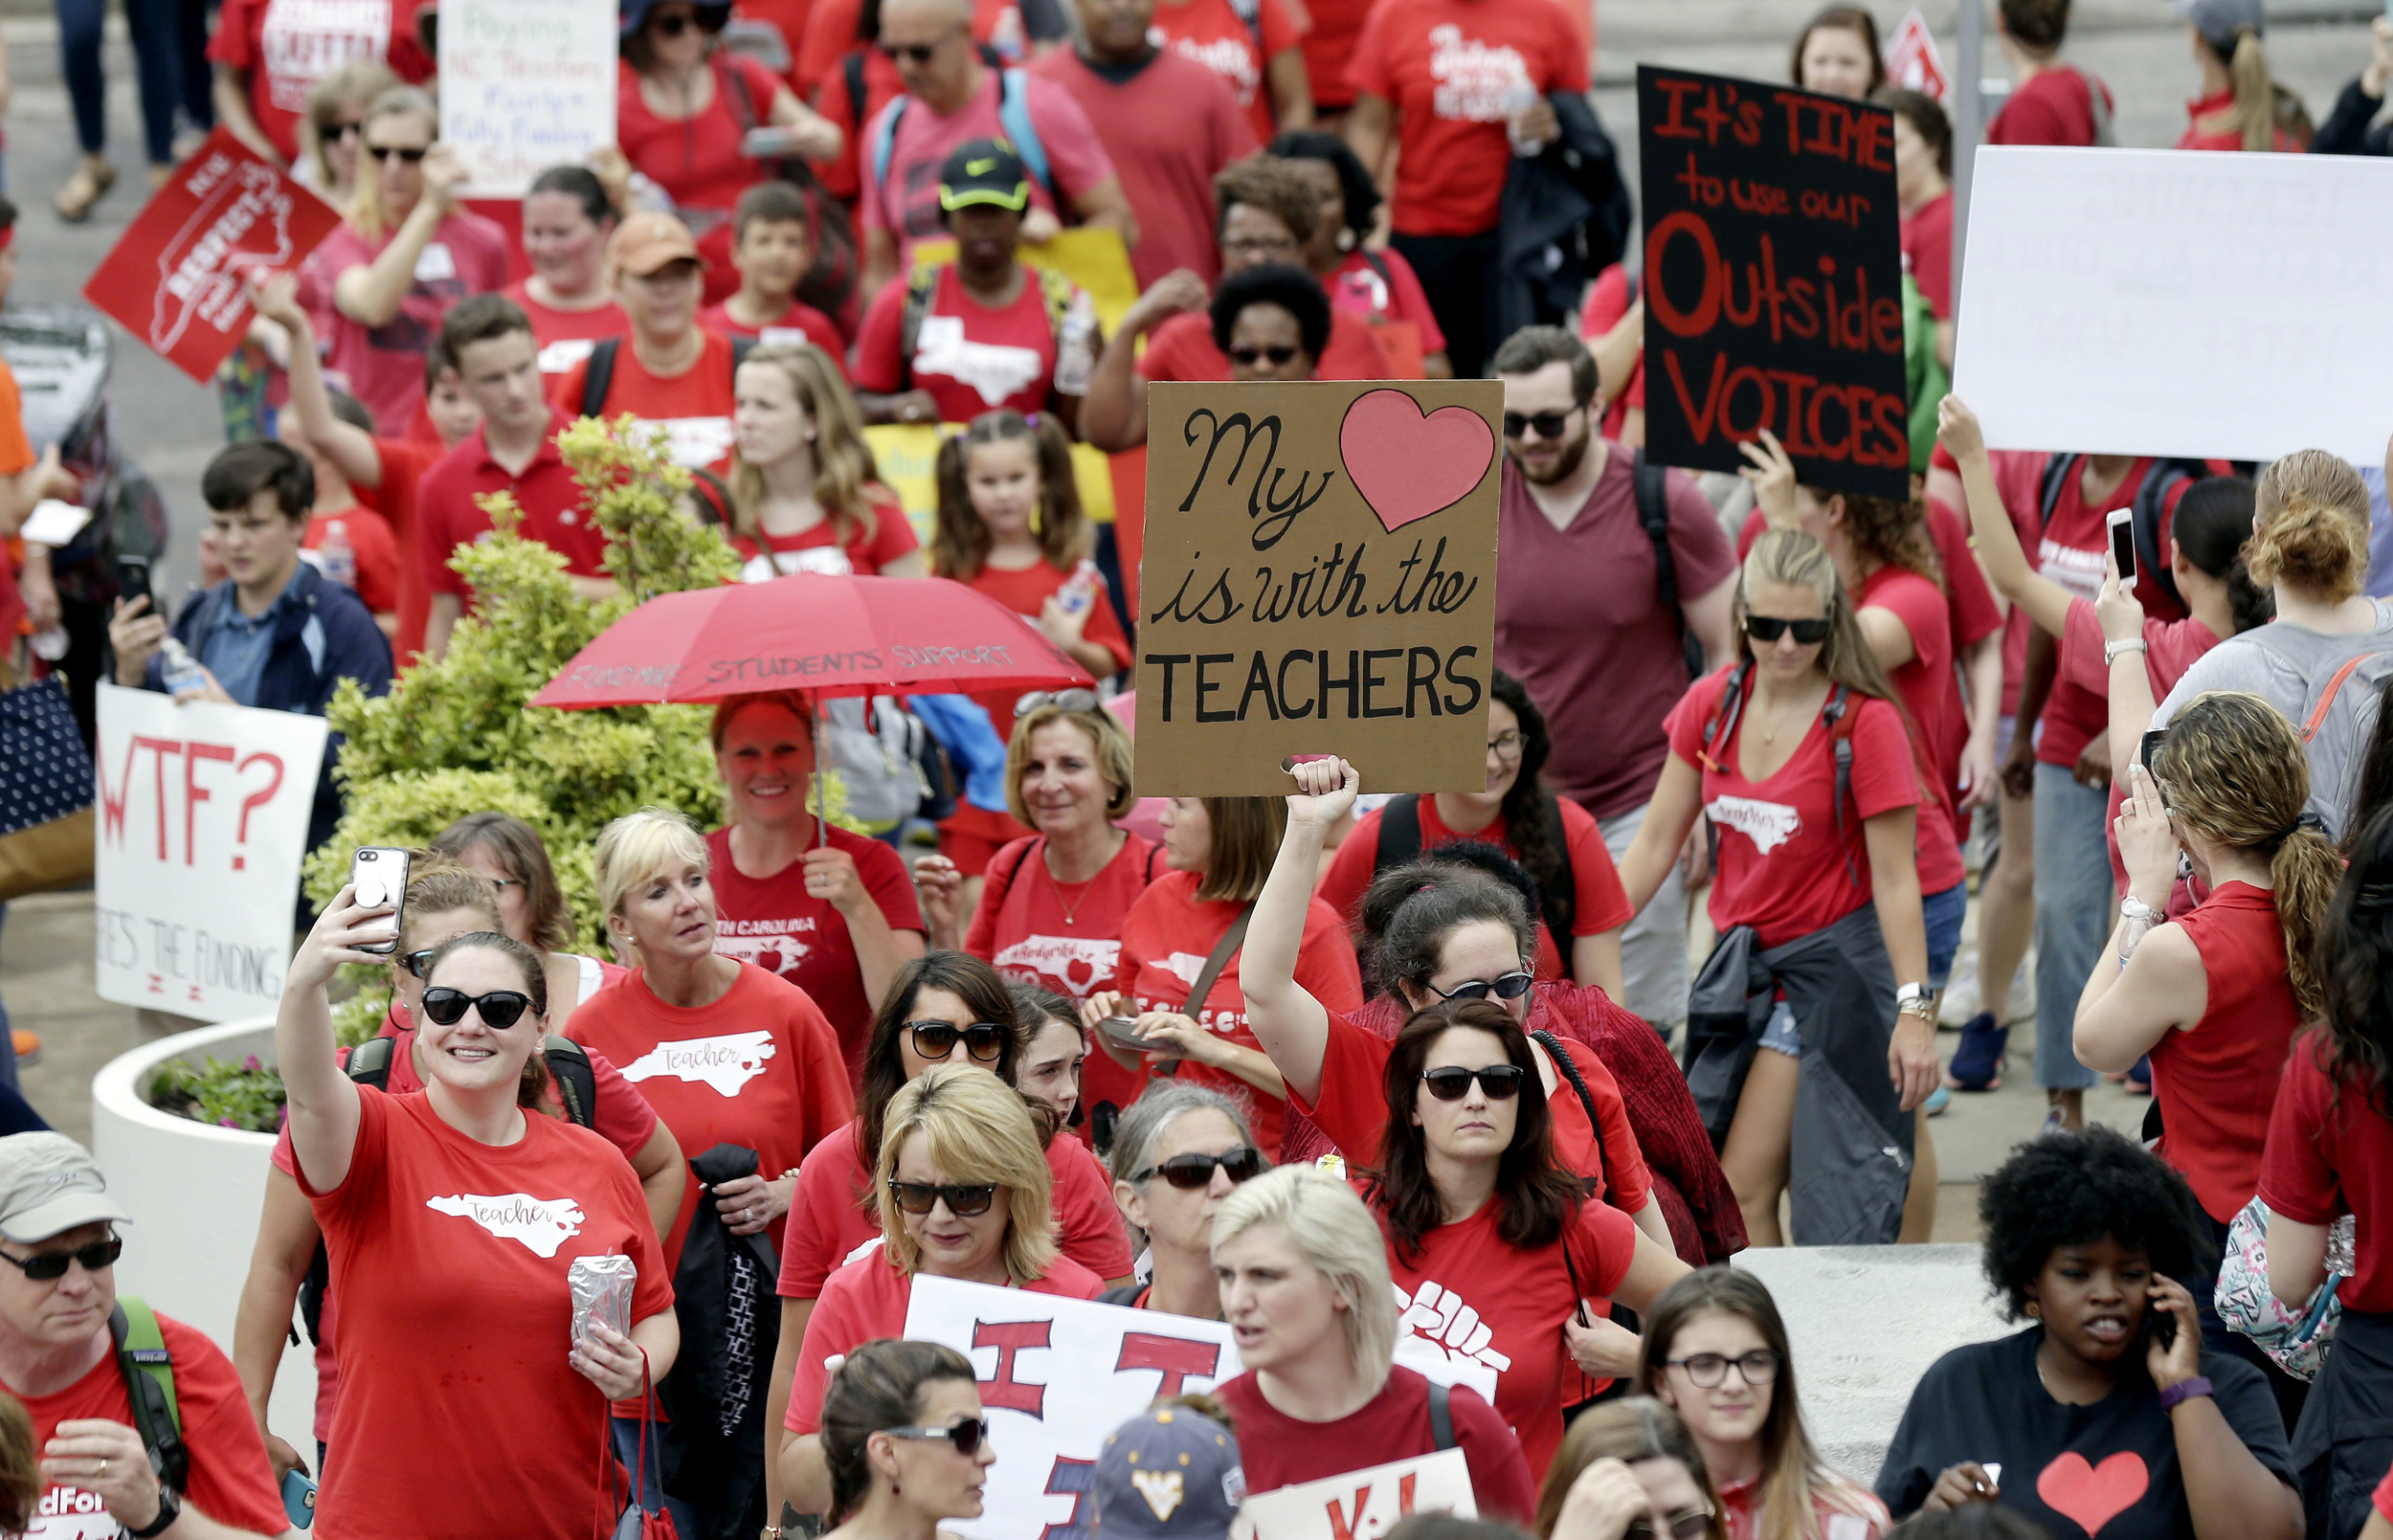 teacher strikes, treacher pay, union busting, right to work, Janus decision, teacher demands, union support